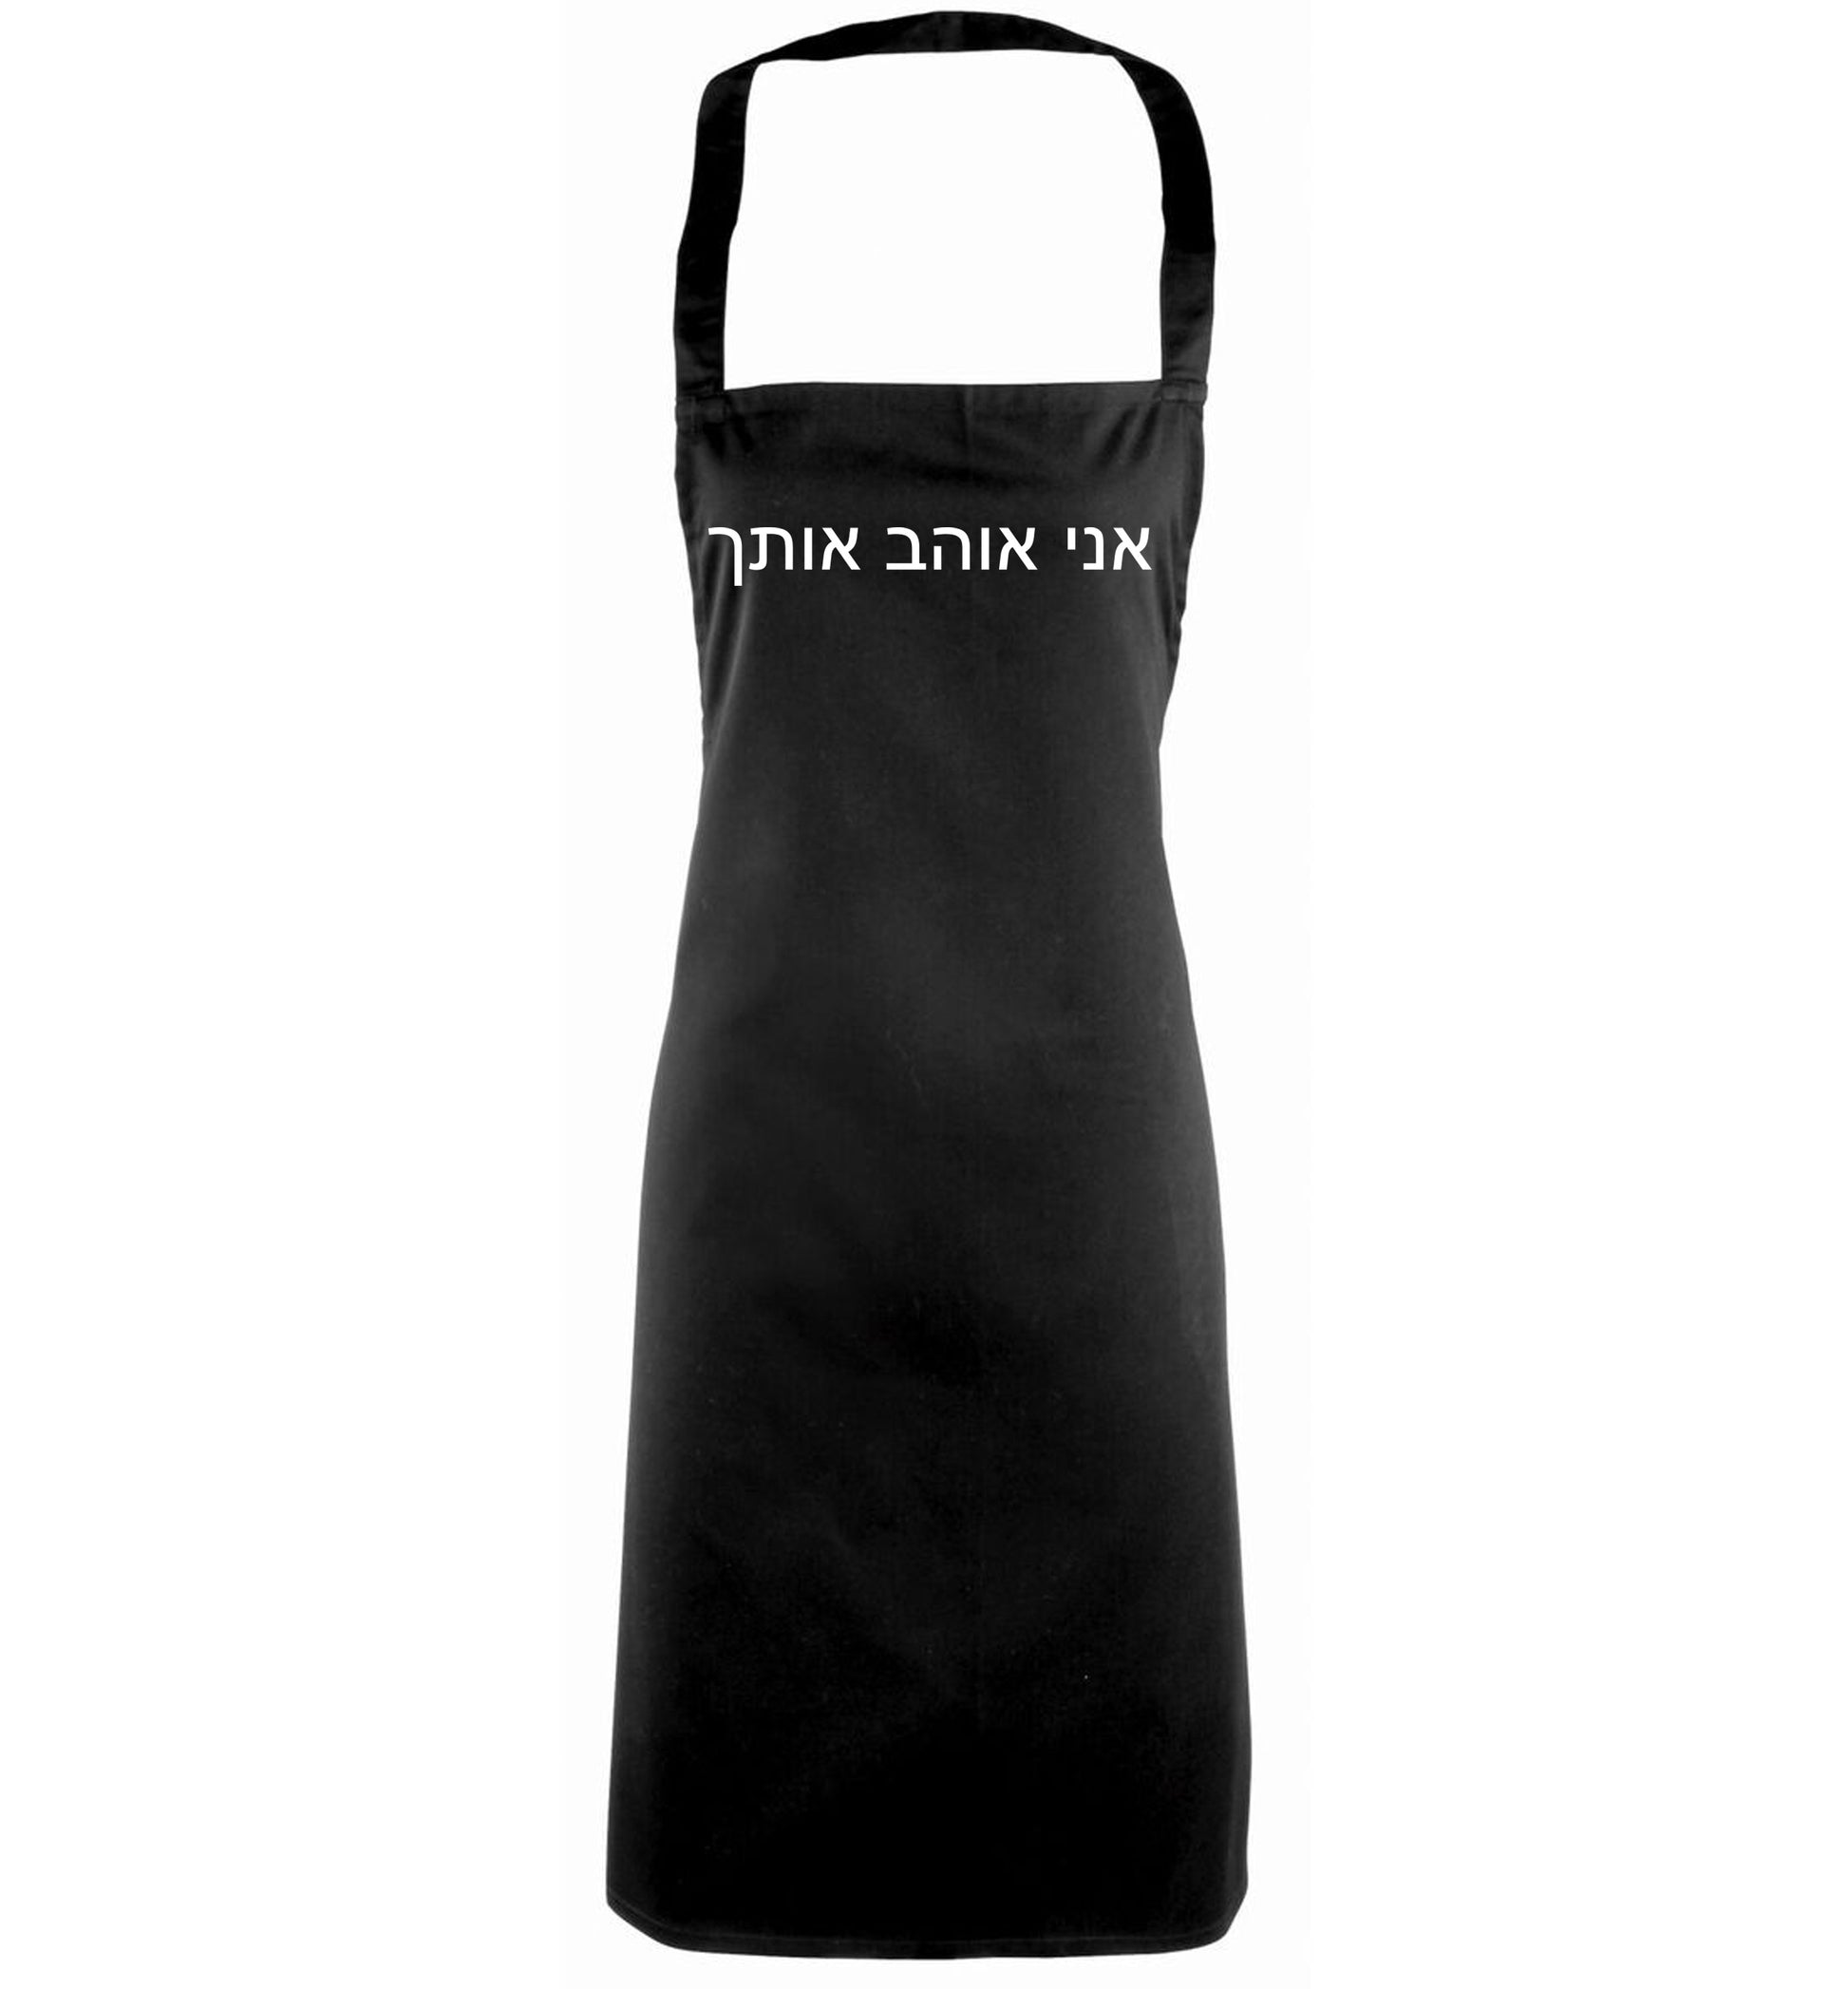 ___ ____ ____ - I love you black apron